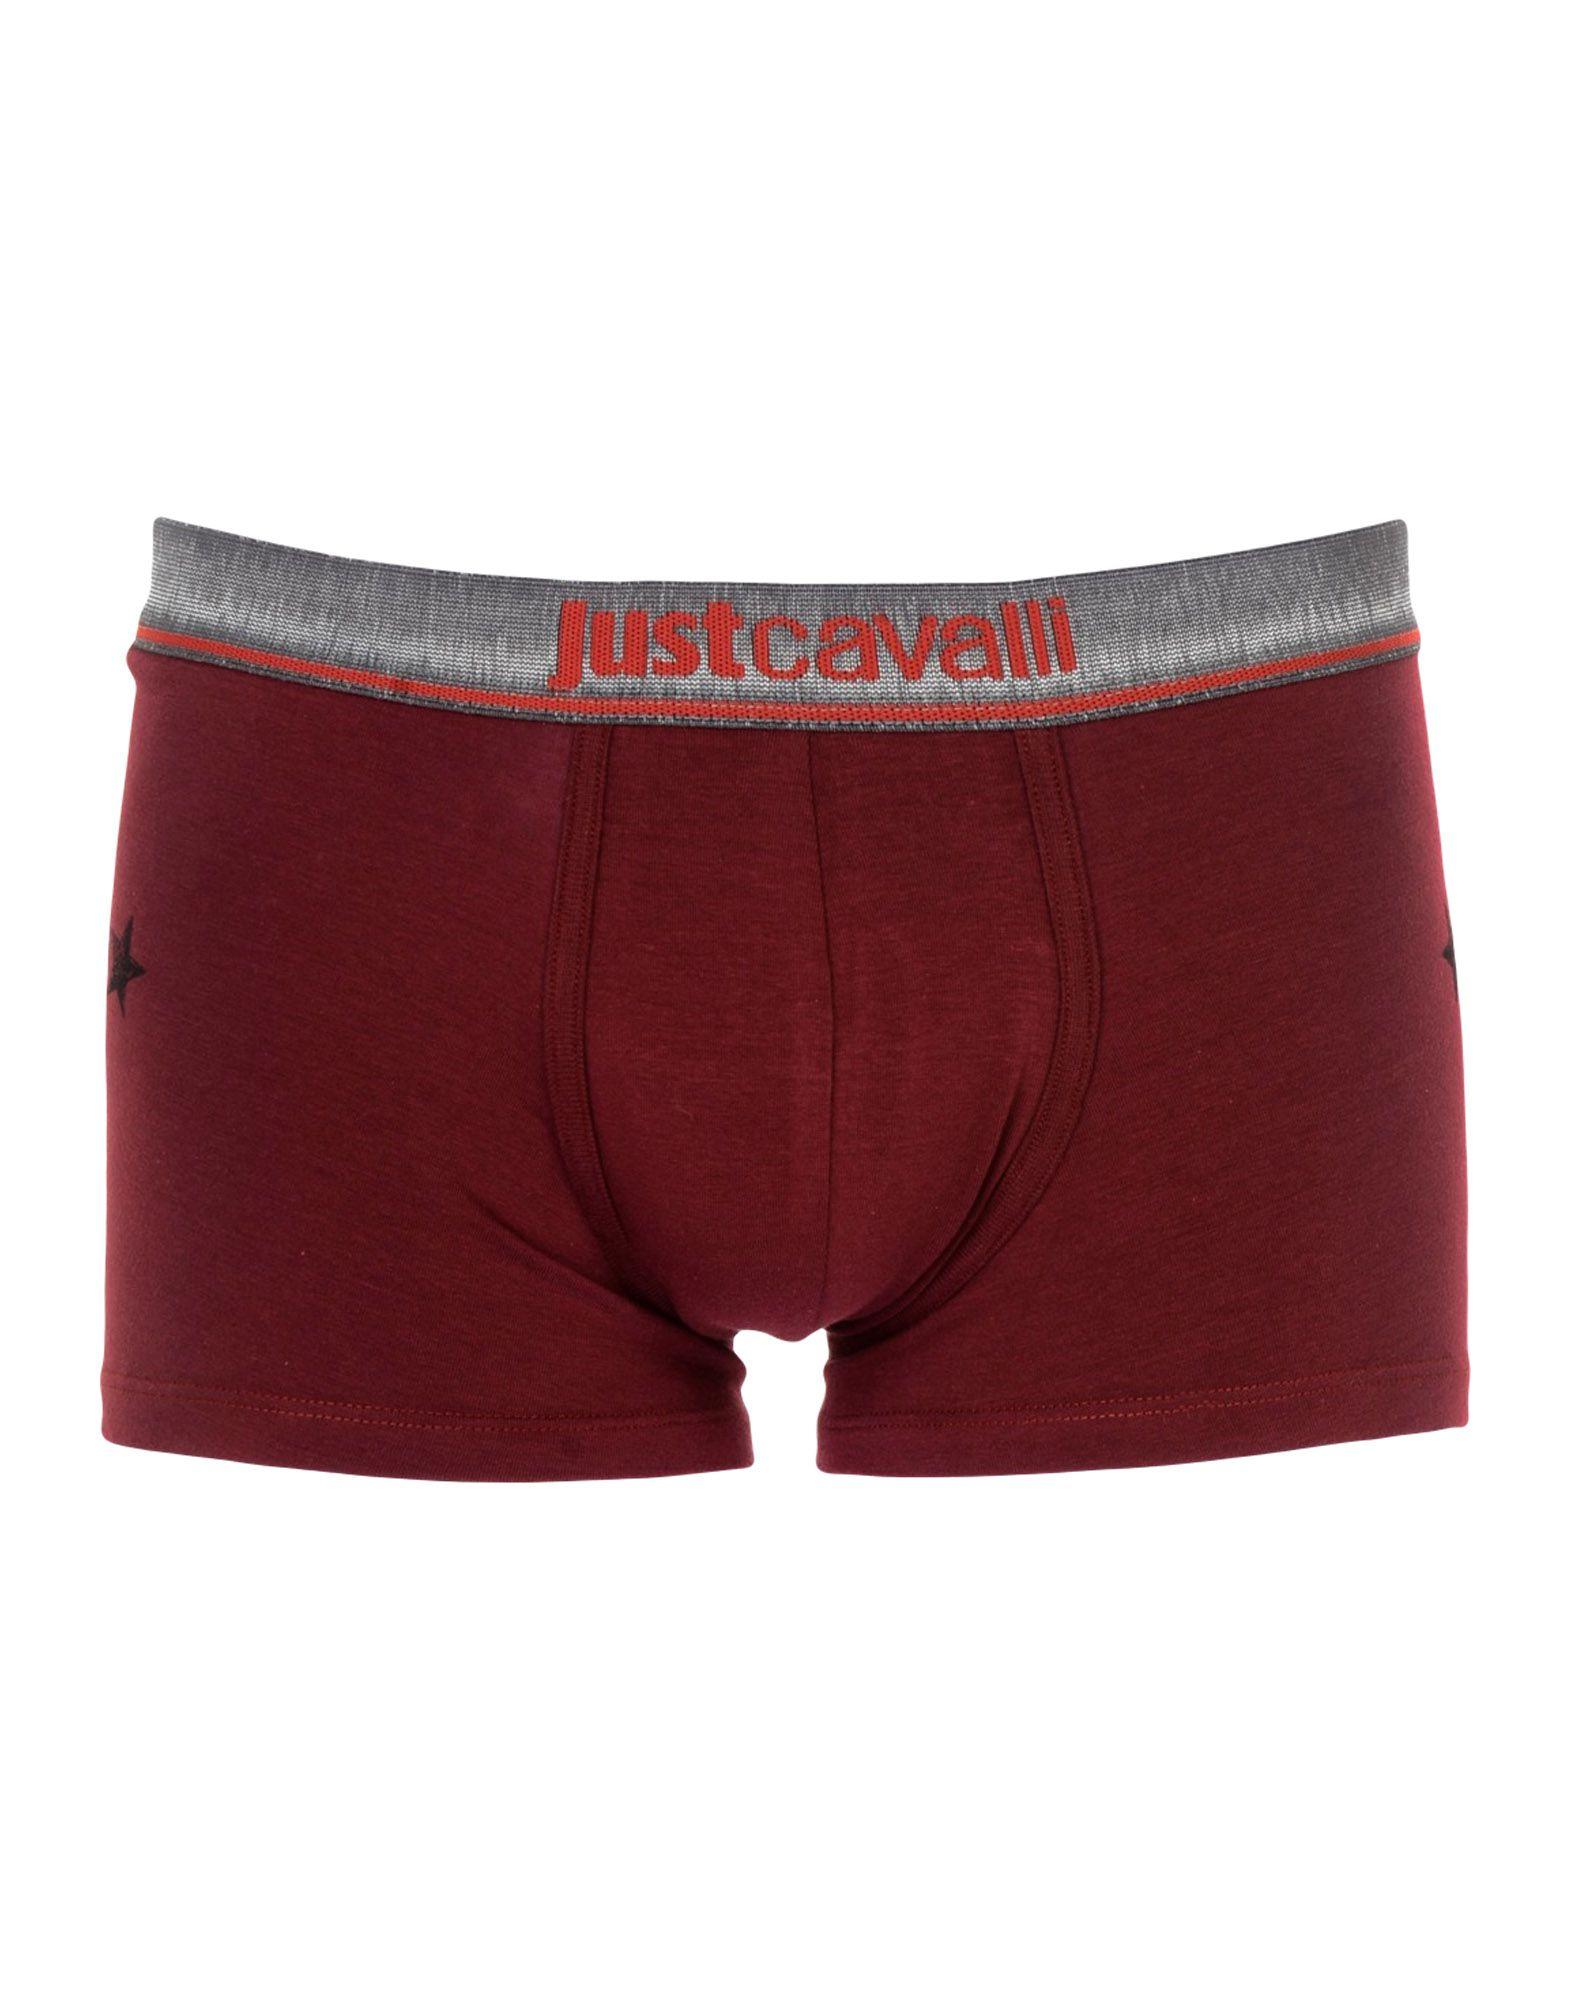 Just Cavalli Underwear Boxers In Maroon | ModeSens